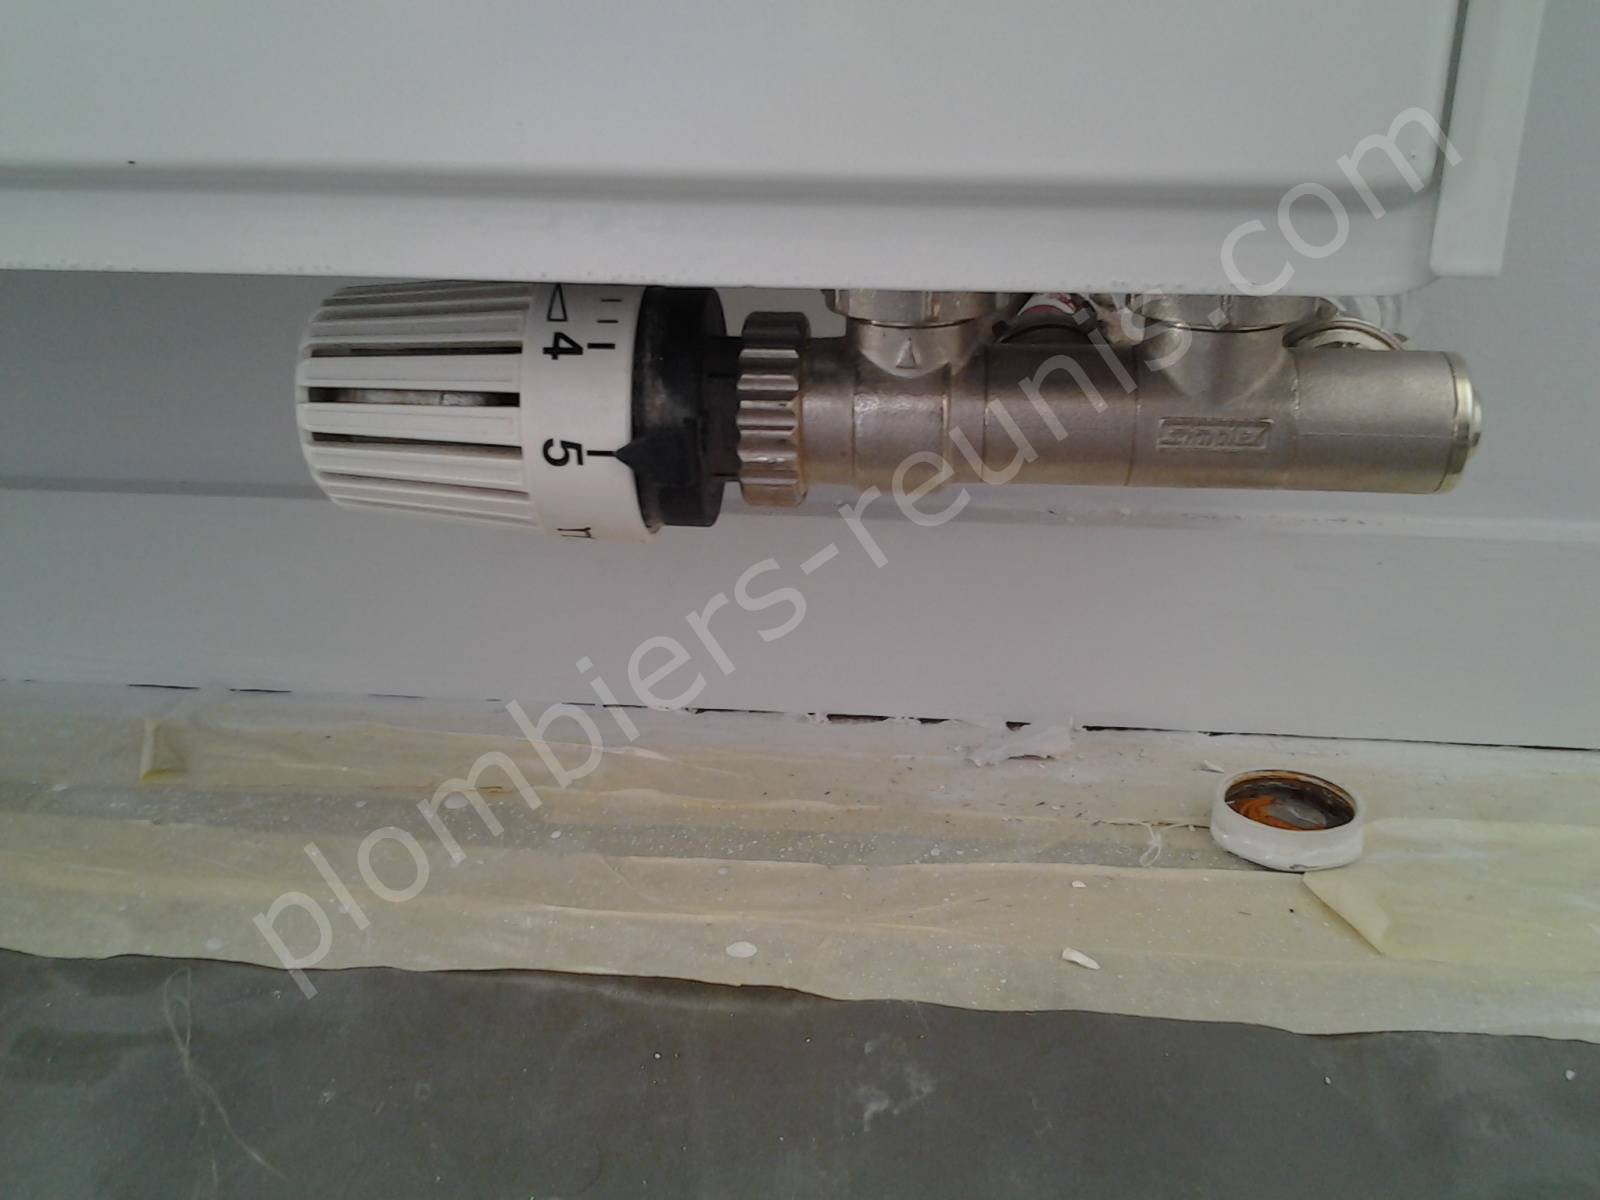 https://plombiers-reunis.com/Host/medias_2013/1379451128-alimentation-radiateur-6-connexions.jpg